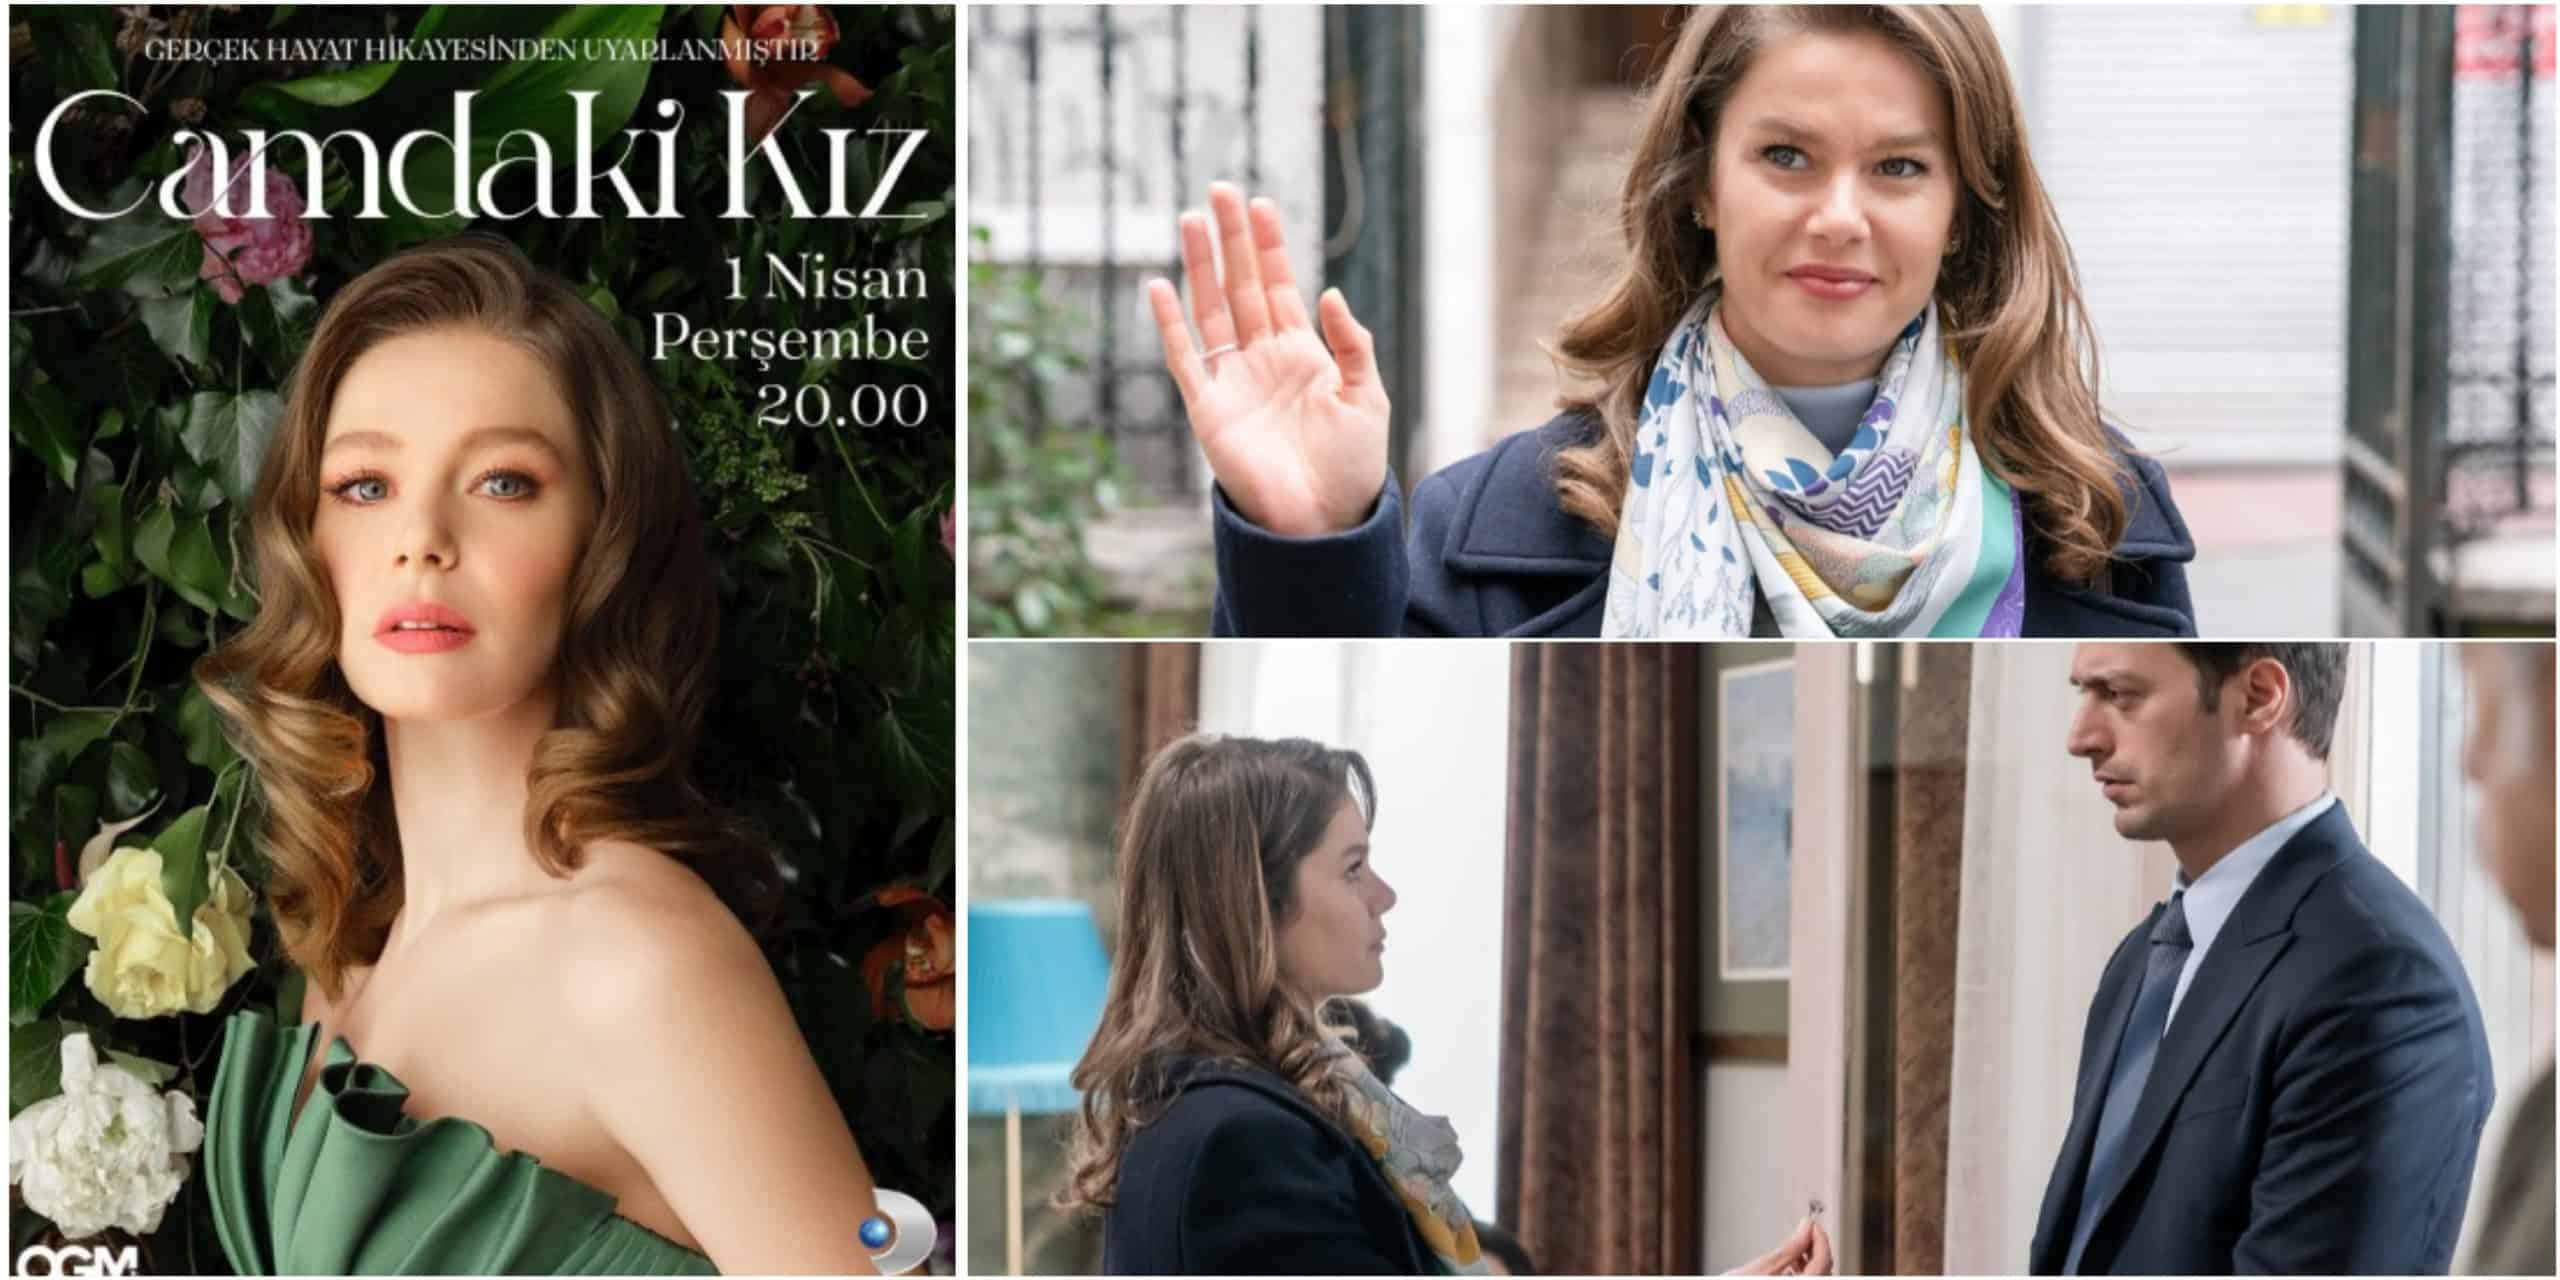 Camdaki Kiz Turkish television series Season 3 Episode 23 Release Date